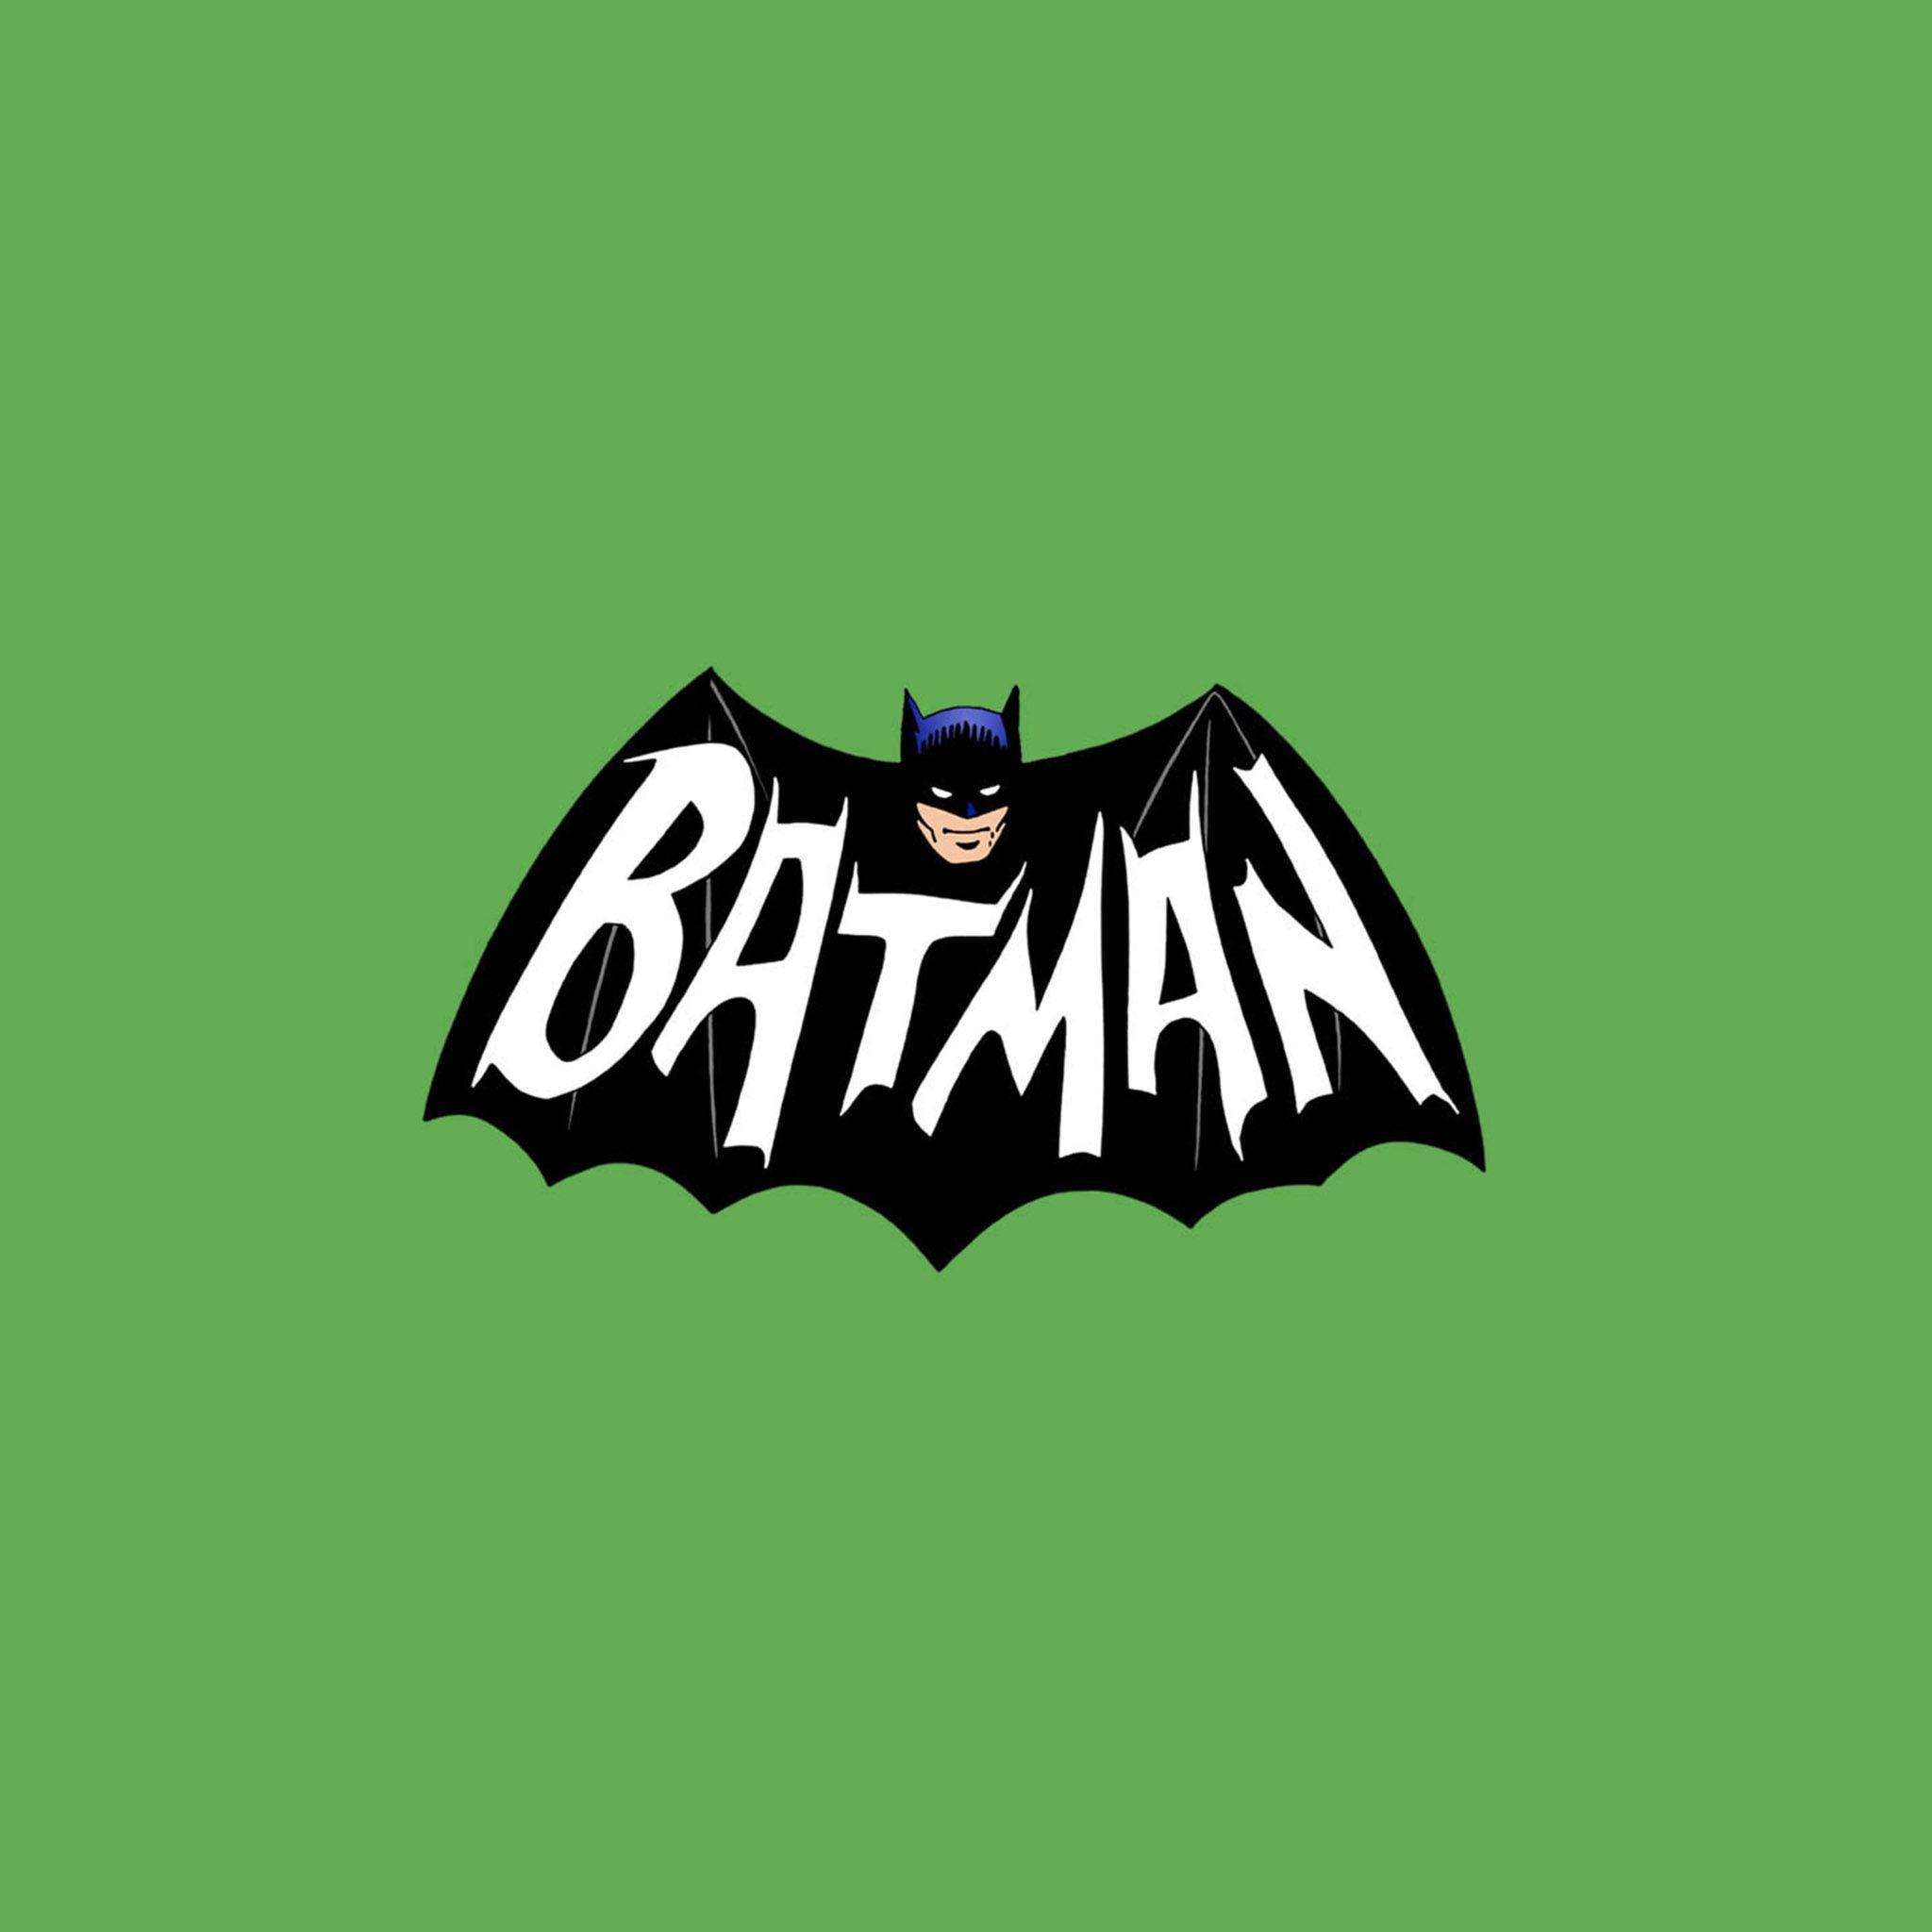 Old Batman Wallpapers - Top Free Old Batman Backgrounds - WallpaperAccess